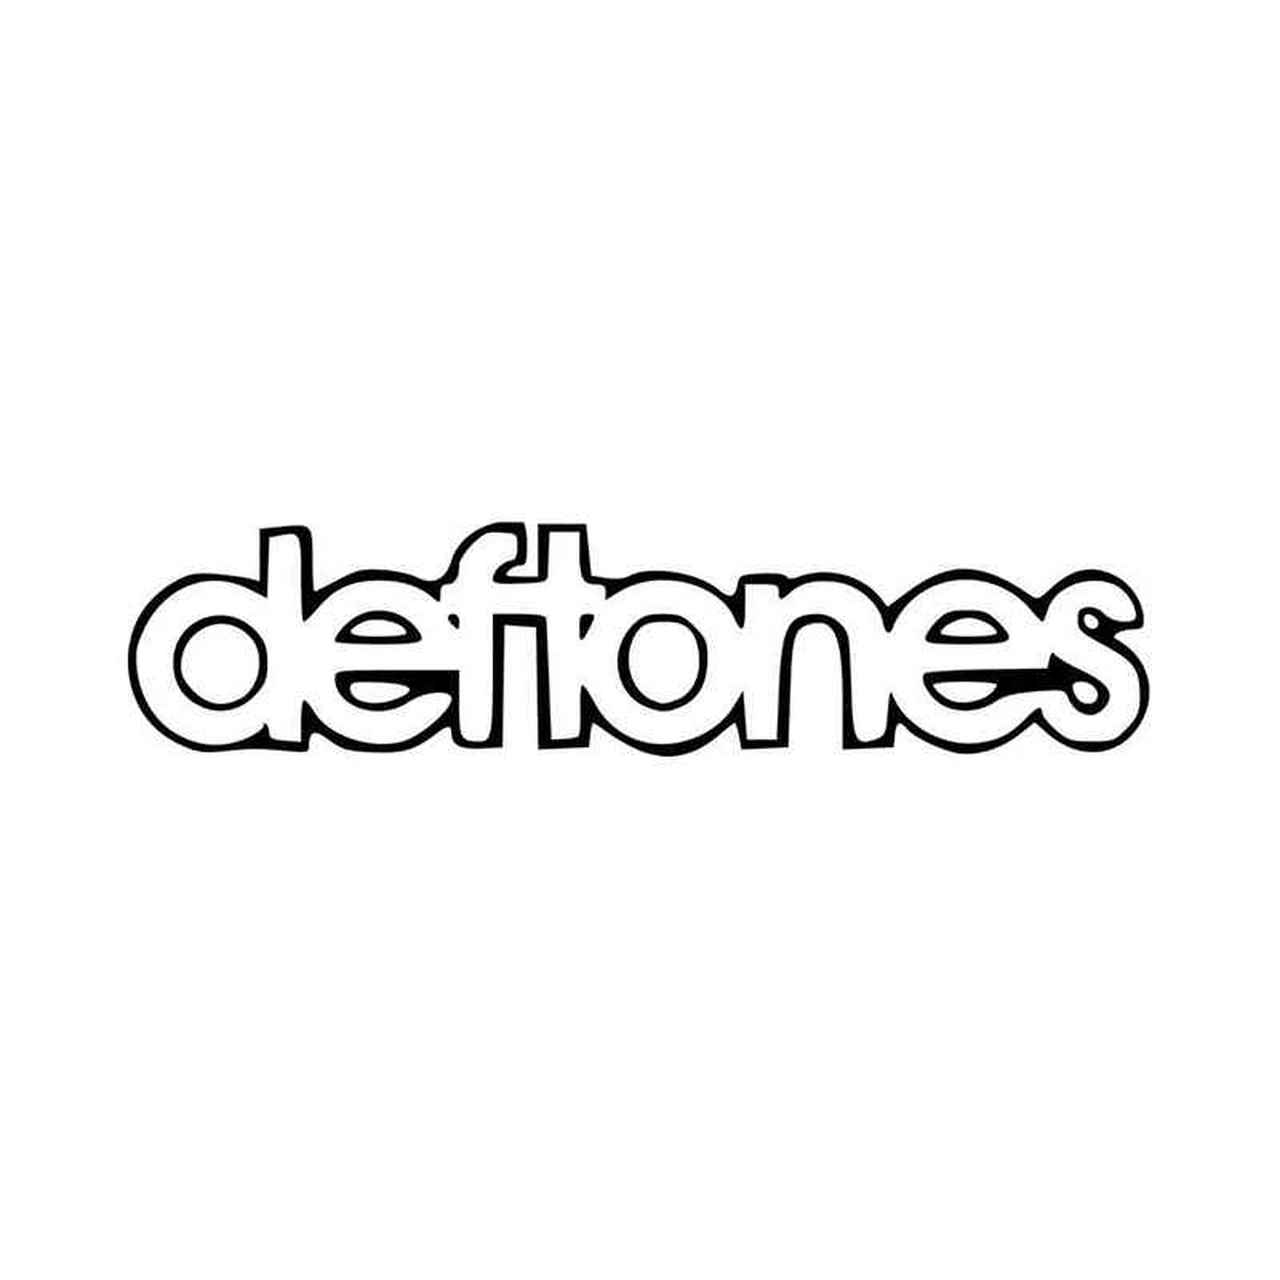 Deftones Logo - Deftones Logo Vinyl Decal Sticker